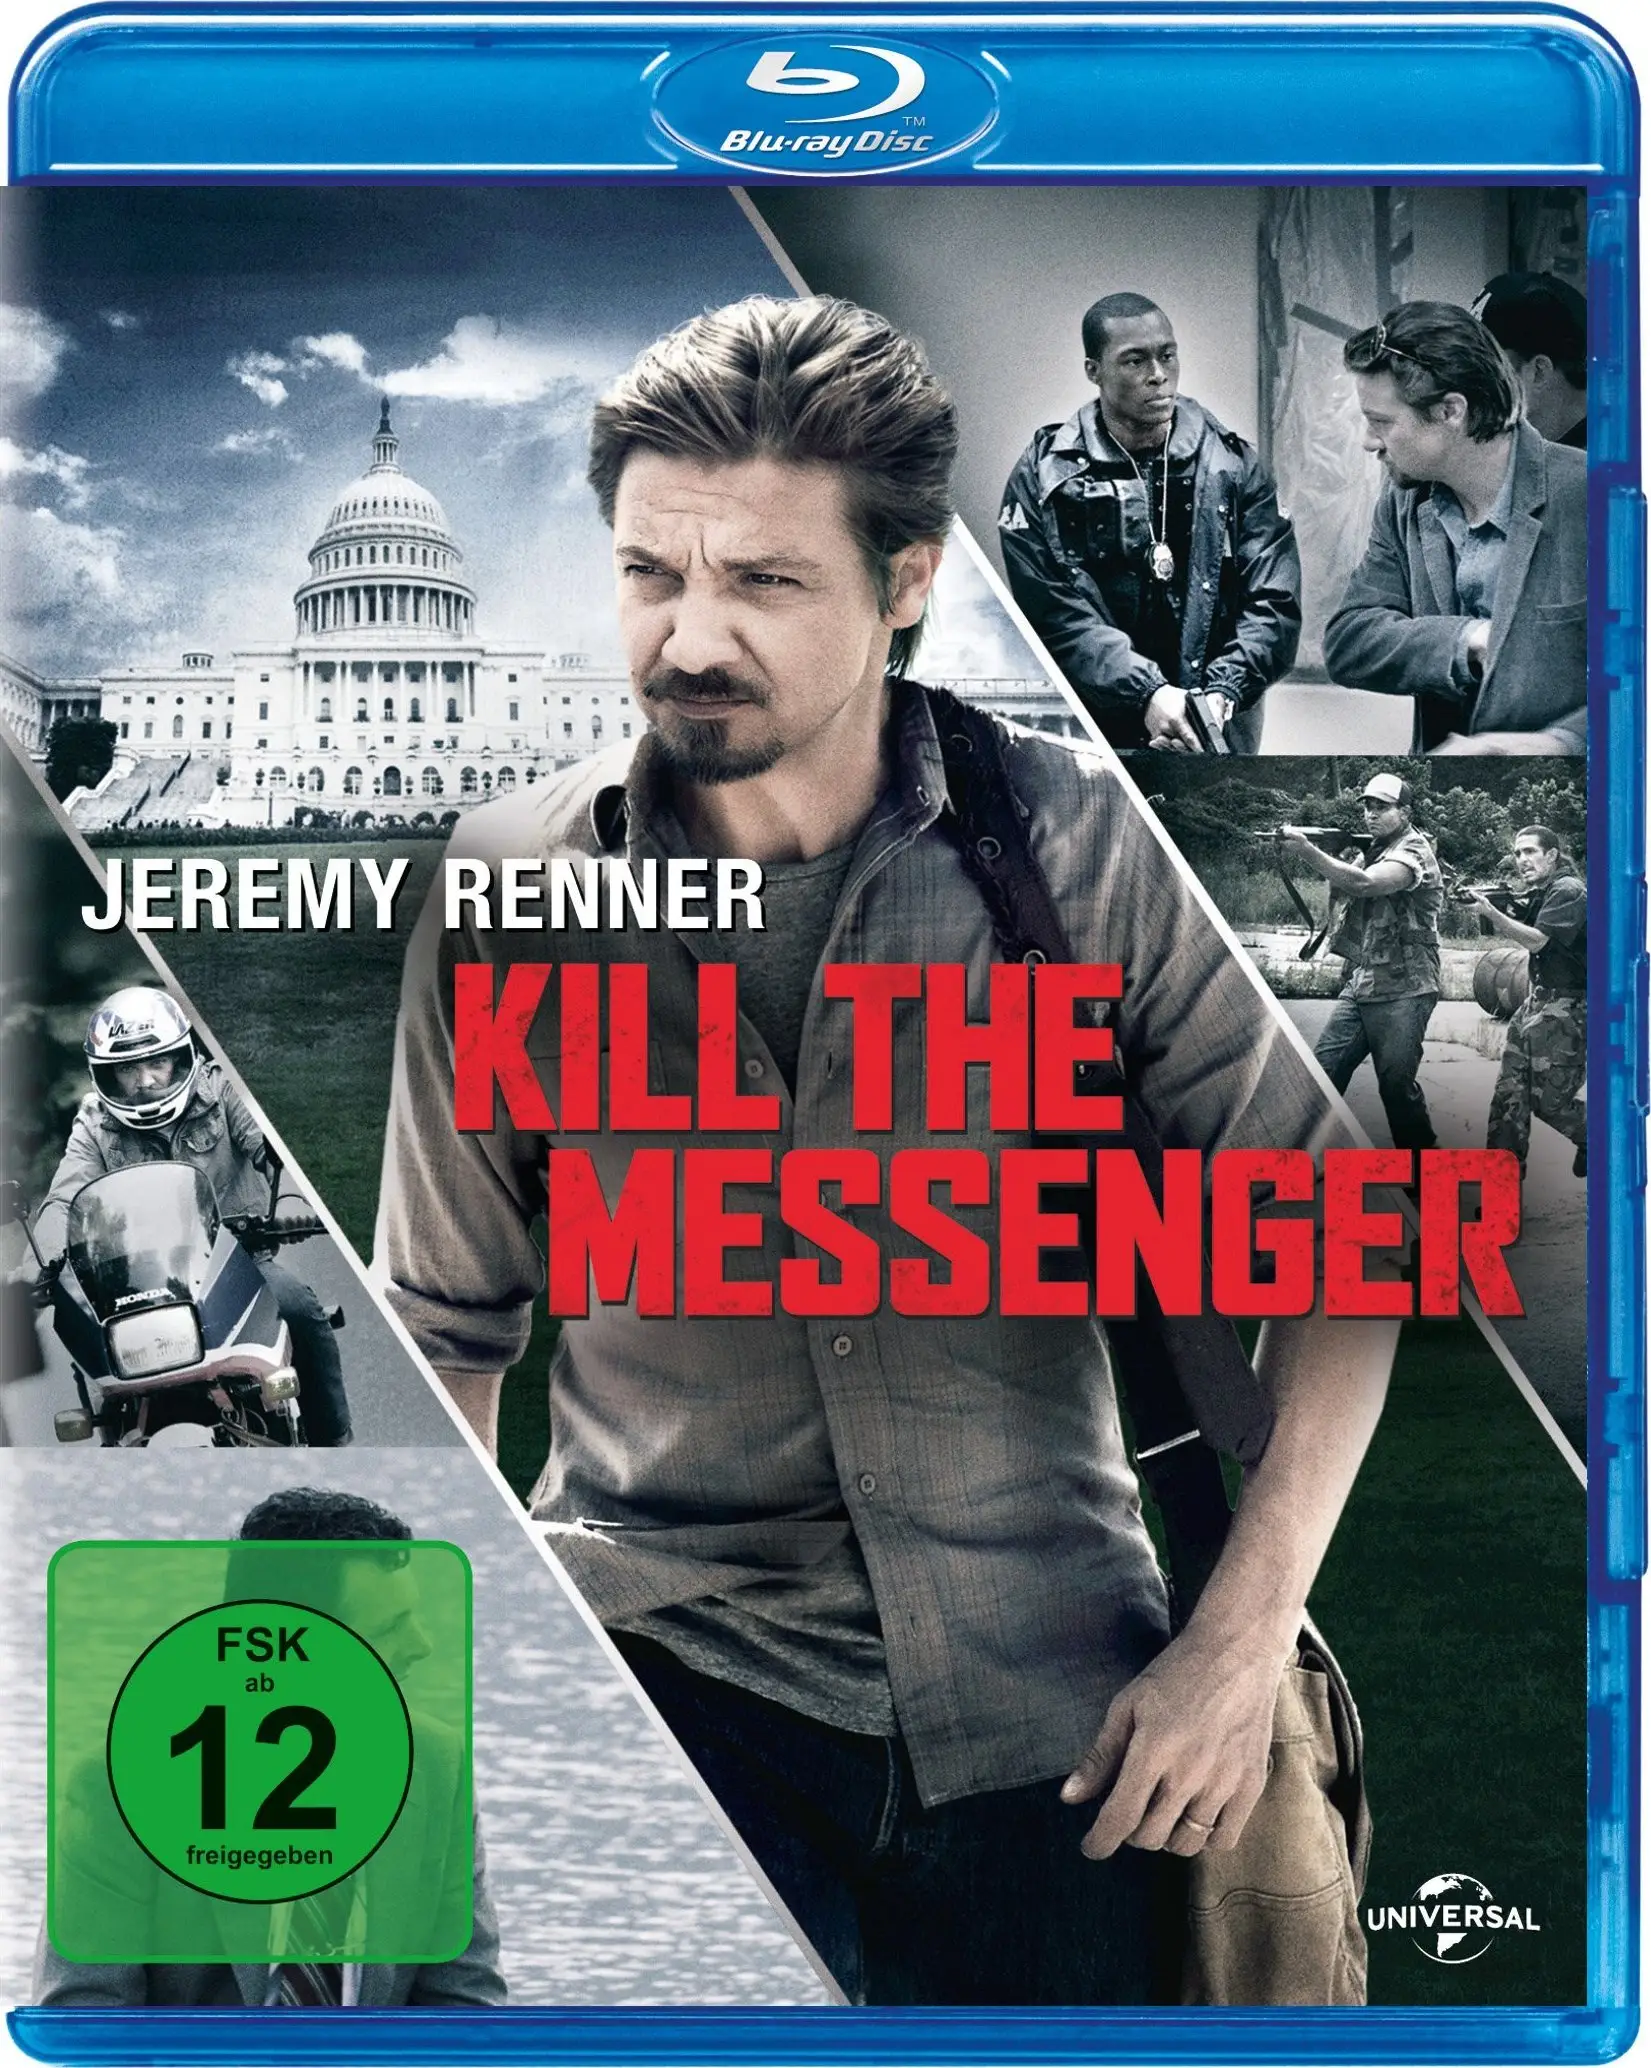 Kill the Messenger 2014 poster. REZODRONE - Kill the Messenger. Kill the Messenger (2-Disc Blu-ray/DVD Set, 2015) w/Slip Cover - Jeremy Renner. Блю мессенджер.